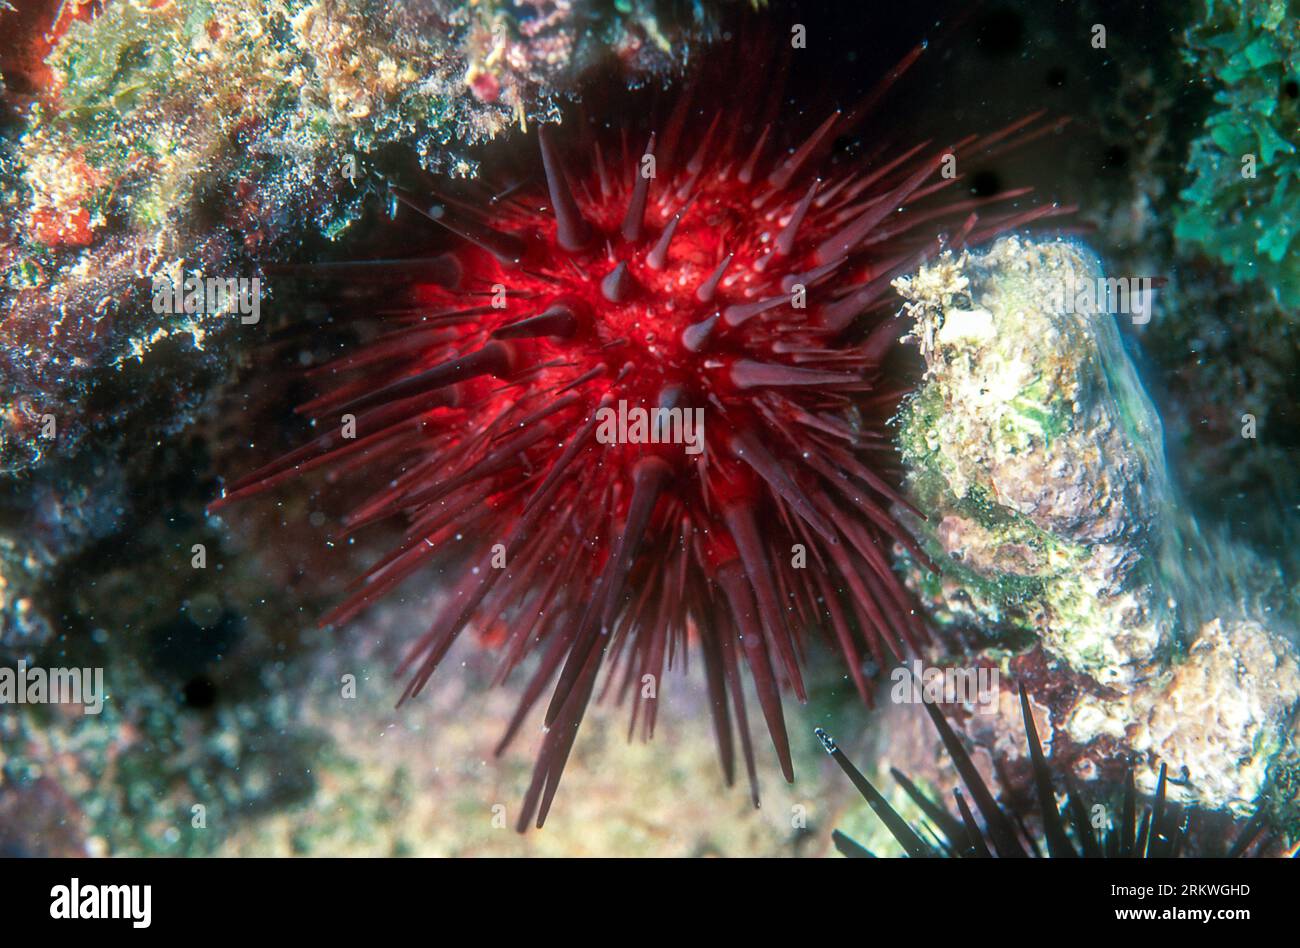 Atlantic rock-boring urchin (Echinometra lucunter) from Puerto Rico, the Caribbean. Stock Photo